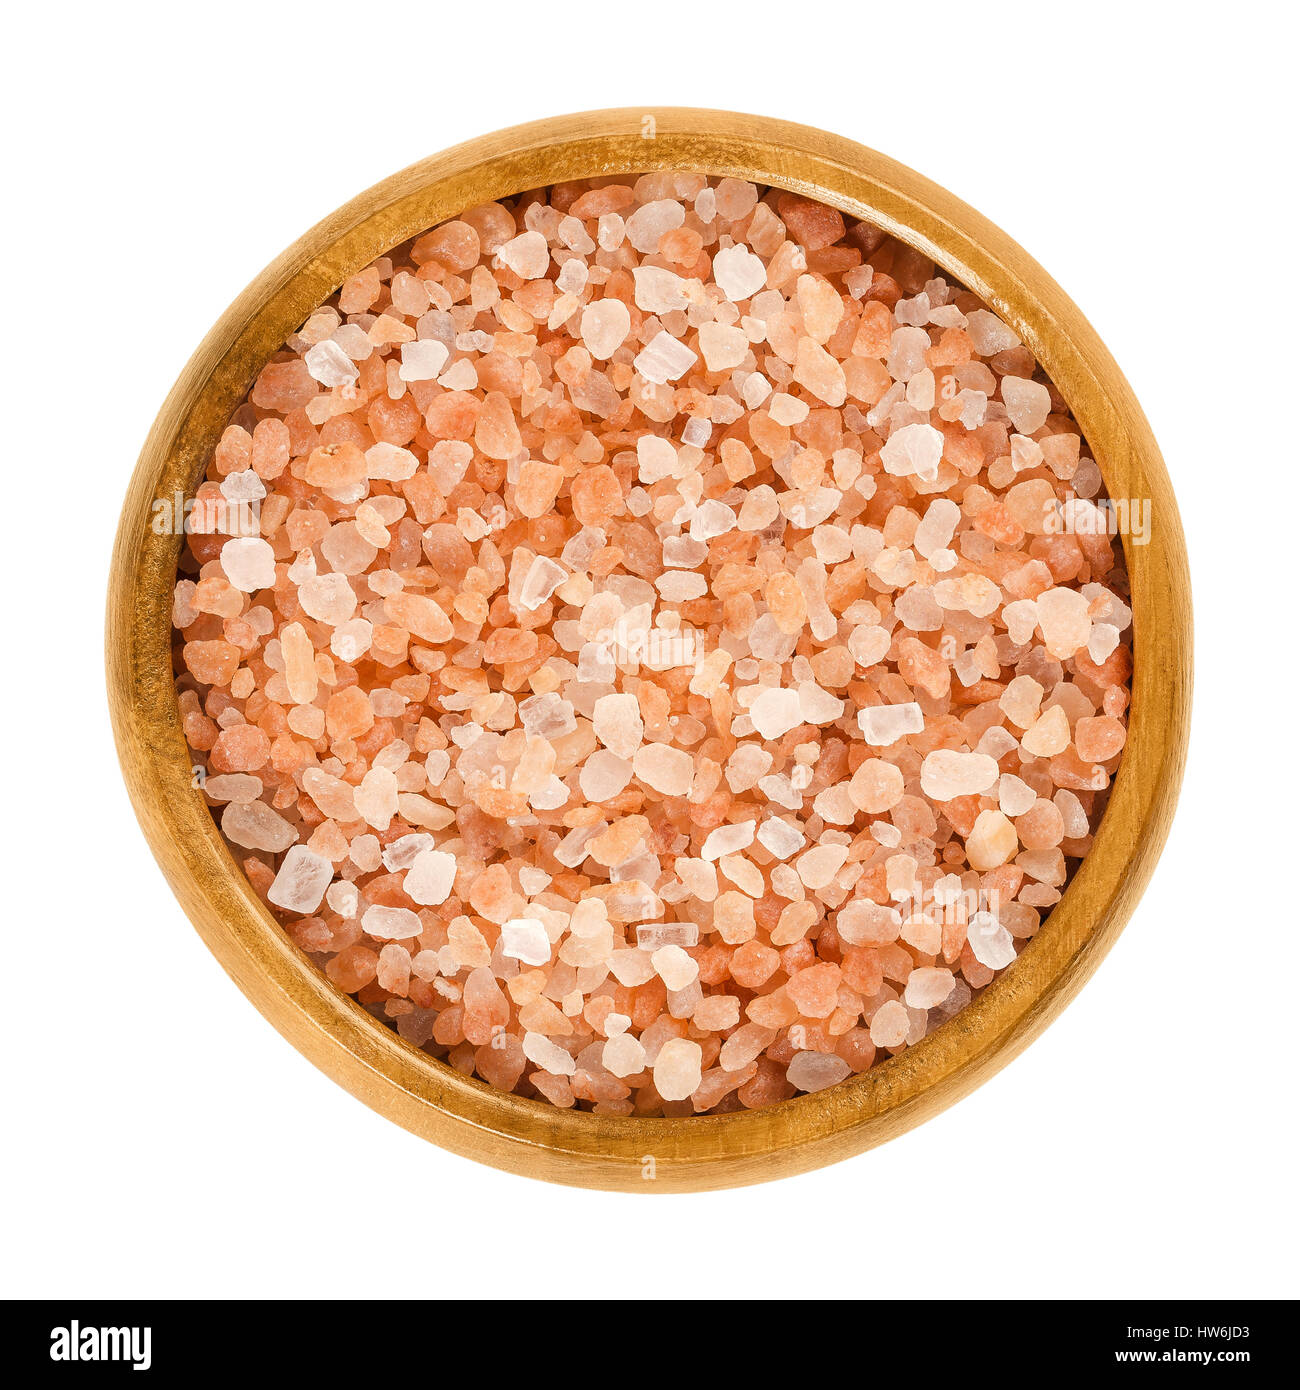 Himalayan salt in wooden bowl. Rock salt. Halite from Punjab region, Pakistan. Similar to table salt plus pink colored mineral impurities. Stock Photo